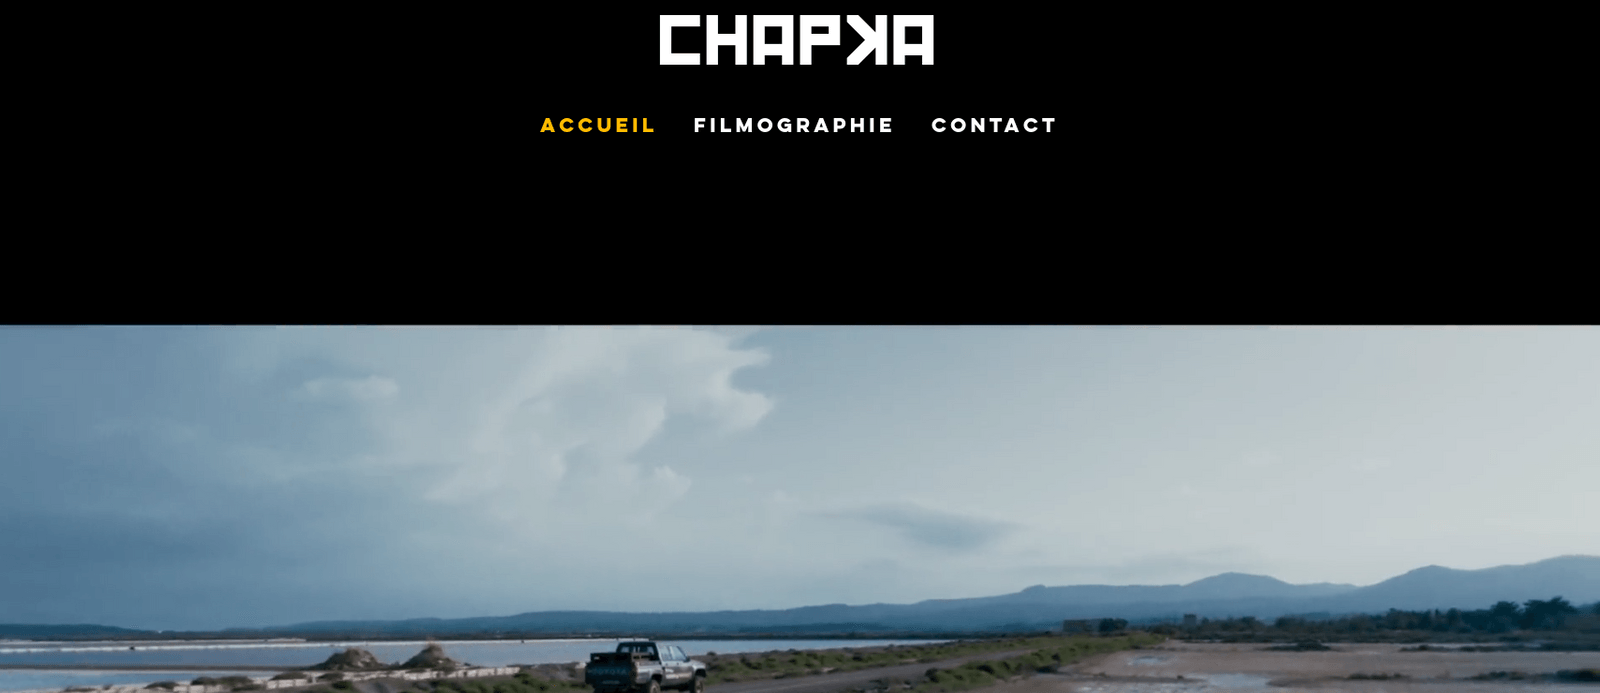 Chapka Films